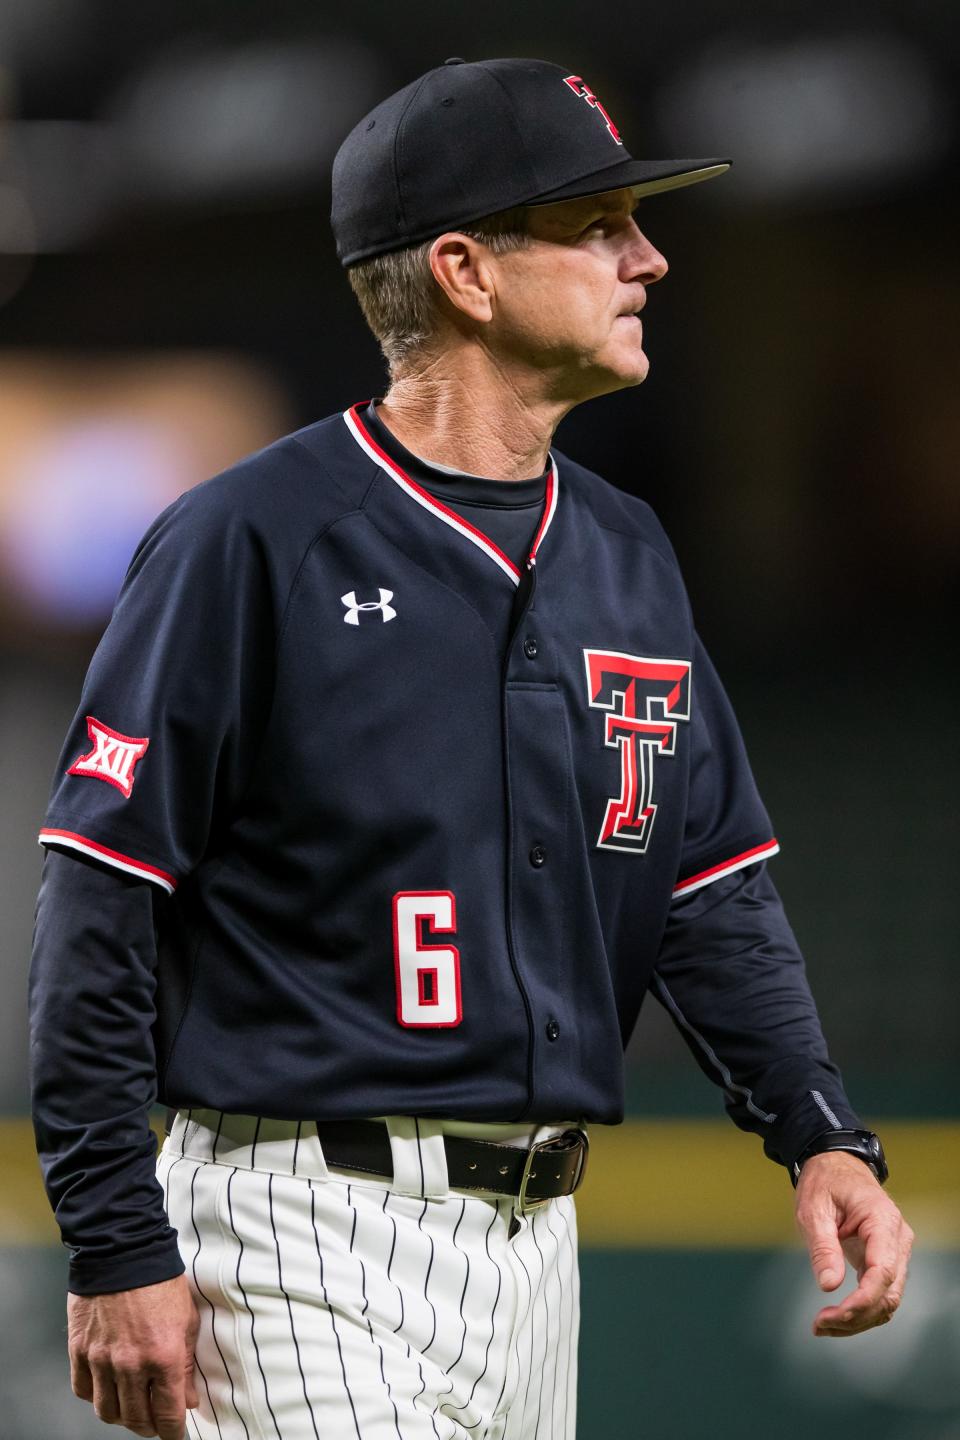 Texas Tech head coach Tim Tadlock walks off the field against Michigan during the State Farm College Baseball Showdown on Friday, Feb. 18, 2022, at Globe Life Field in Arlington, Texas.